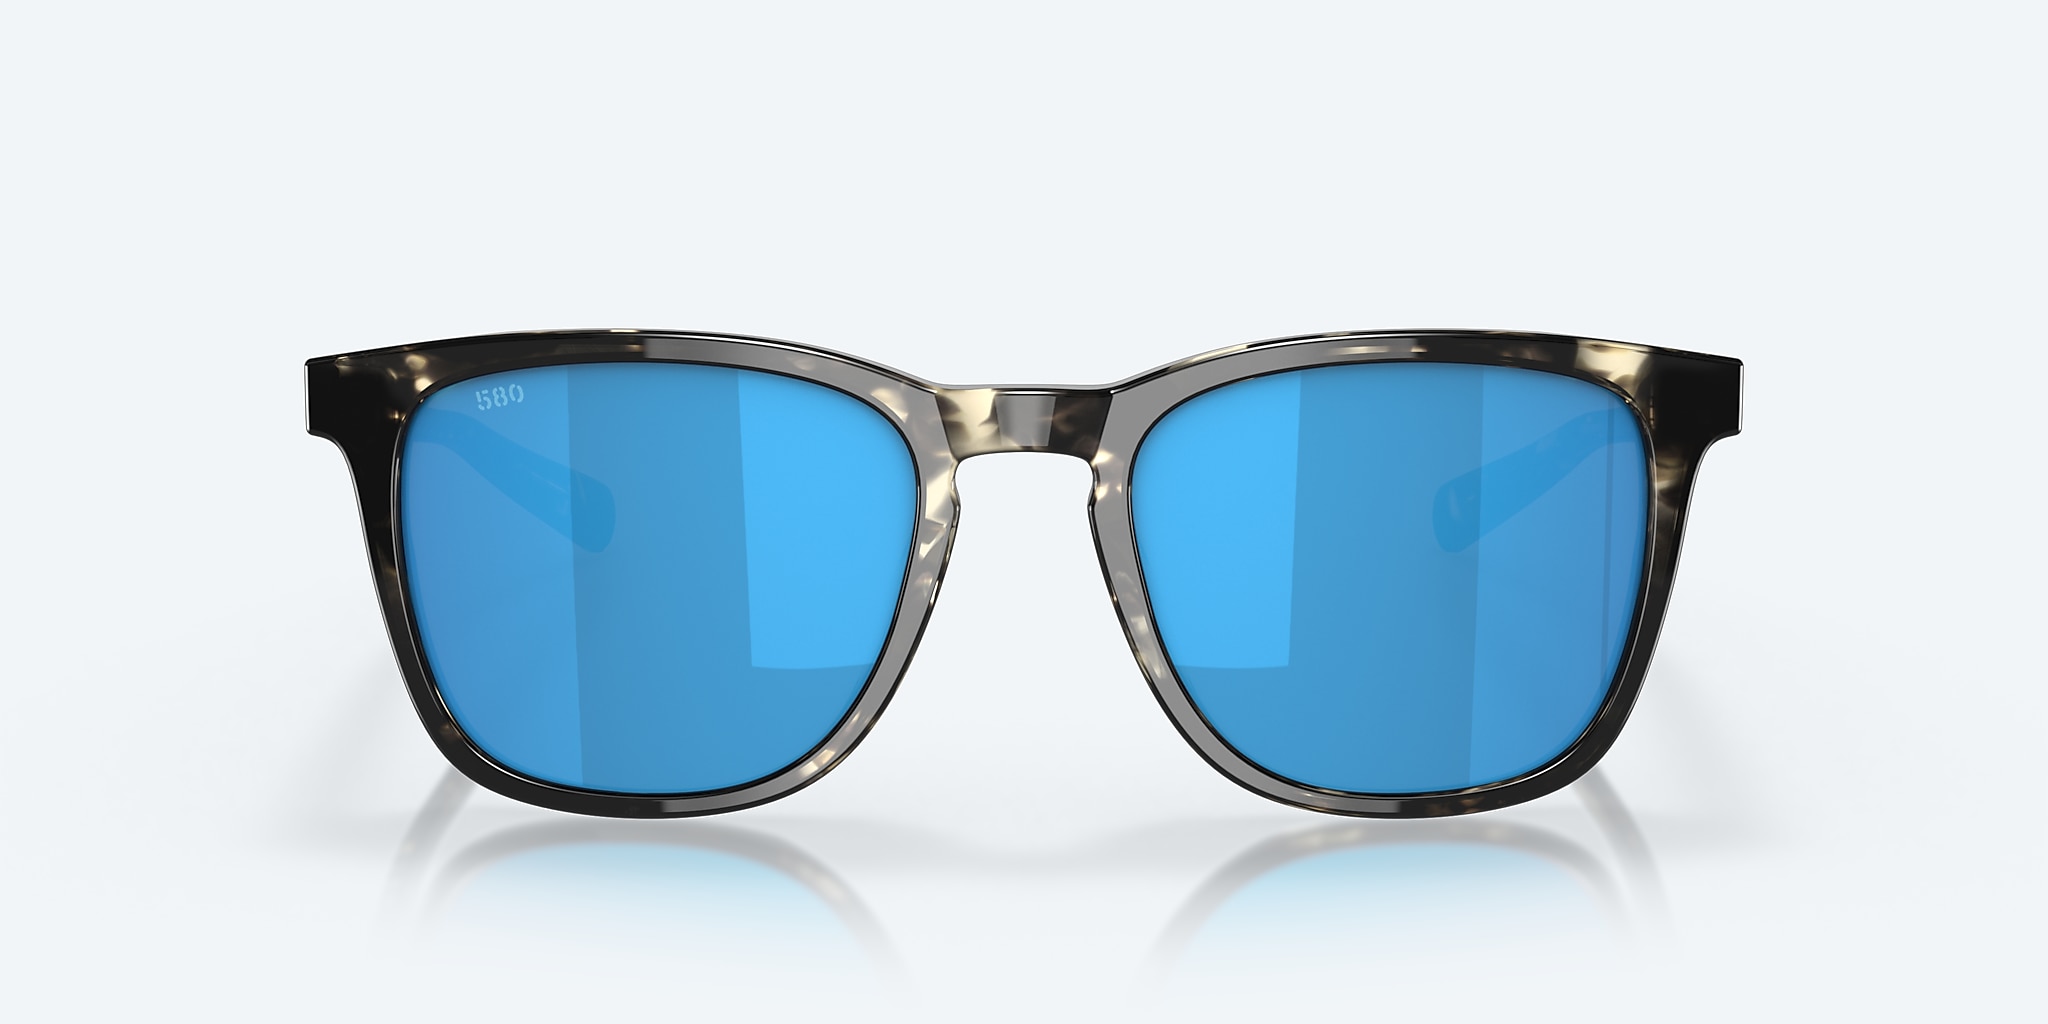 Sullivan Blue-light Readers, Shop Blue-light Glasses